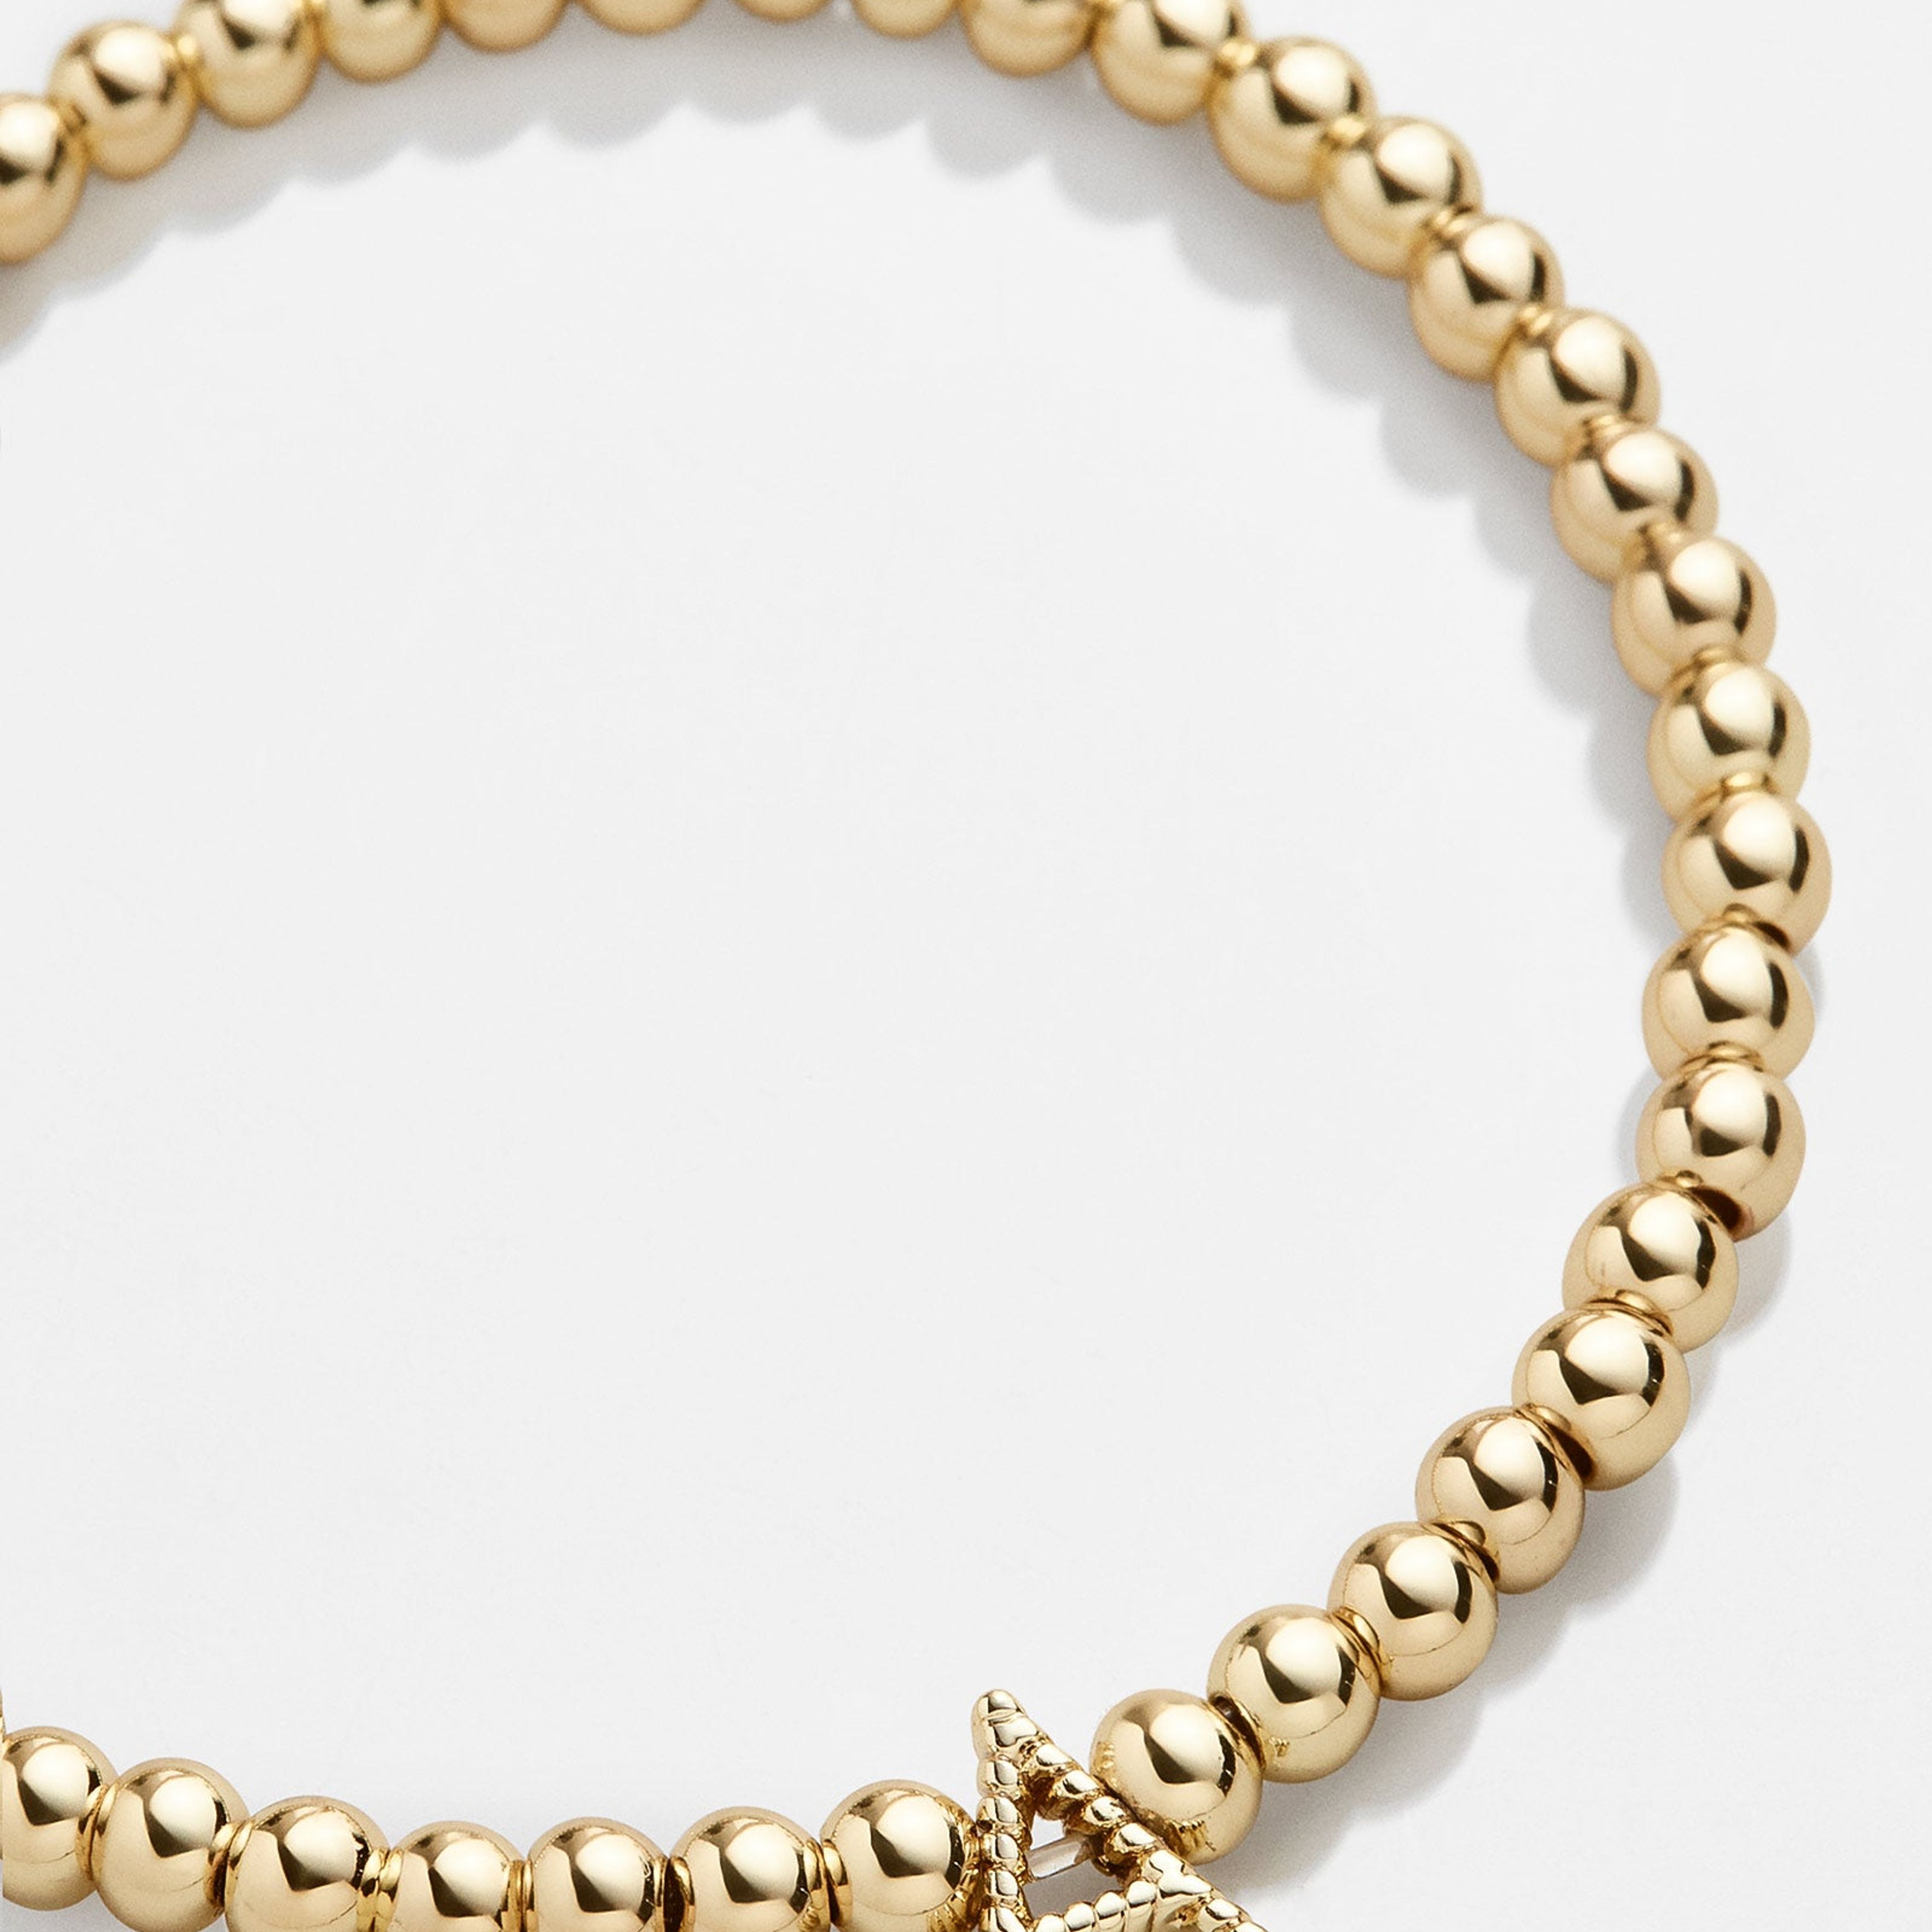 Initial Pisa Bracelet - Gold Twist